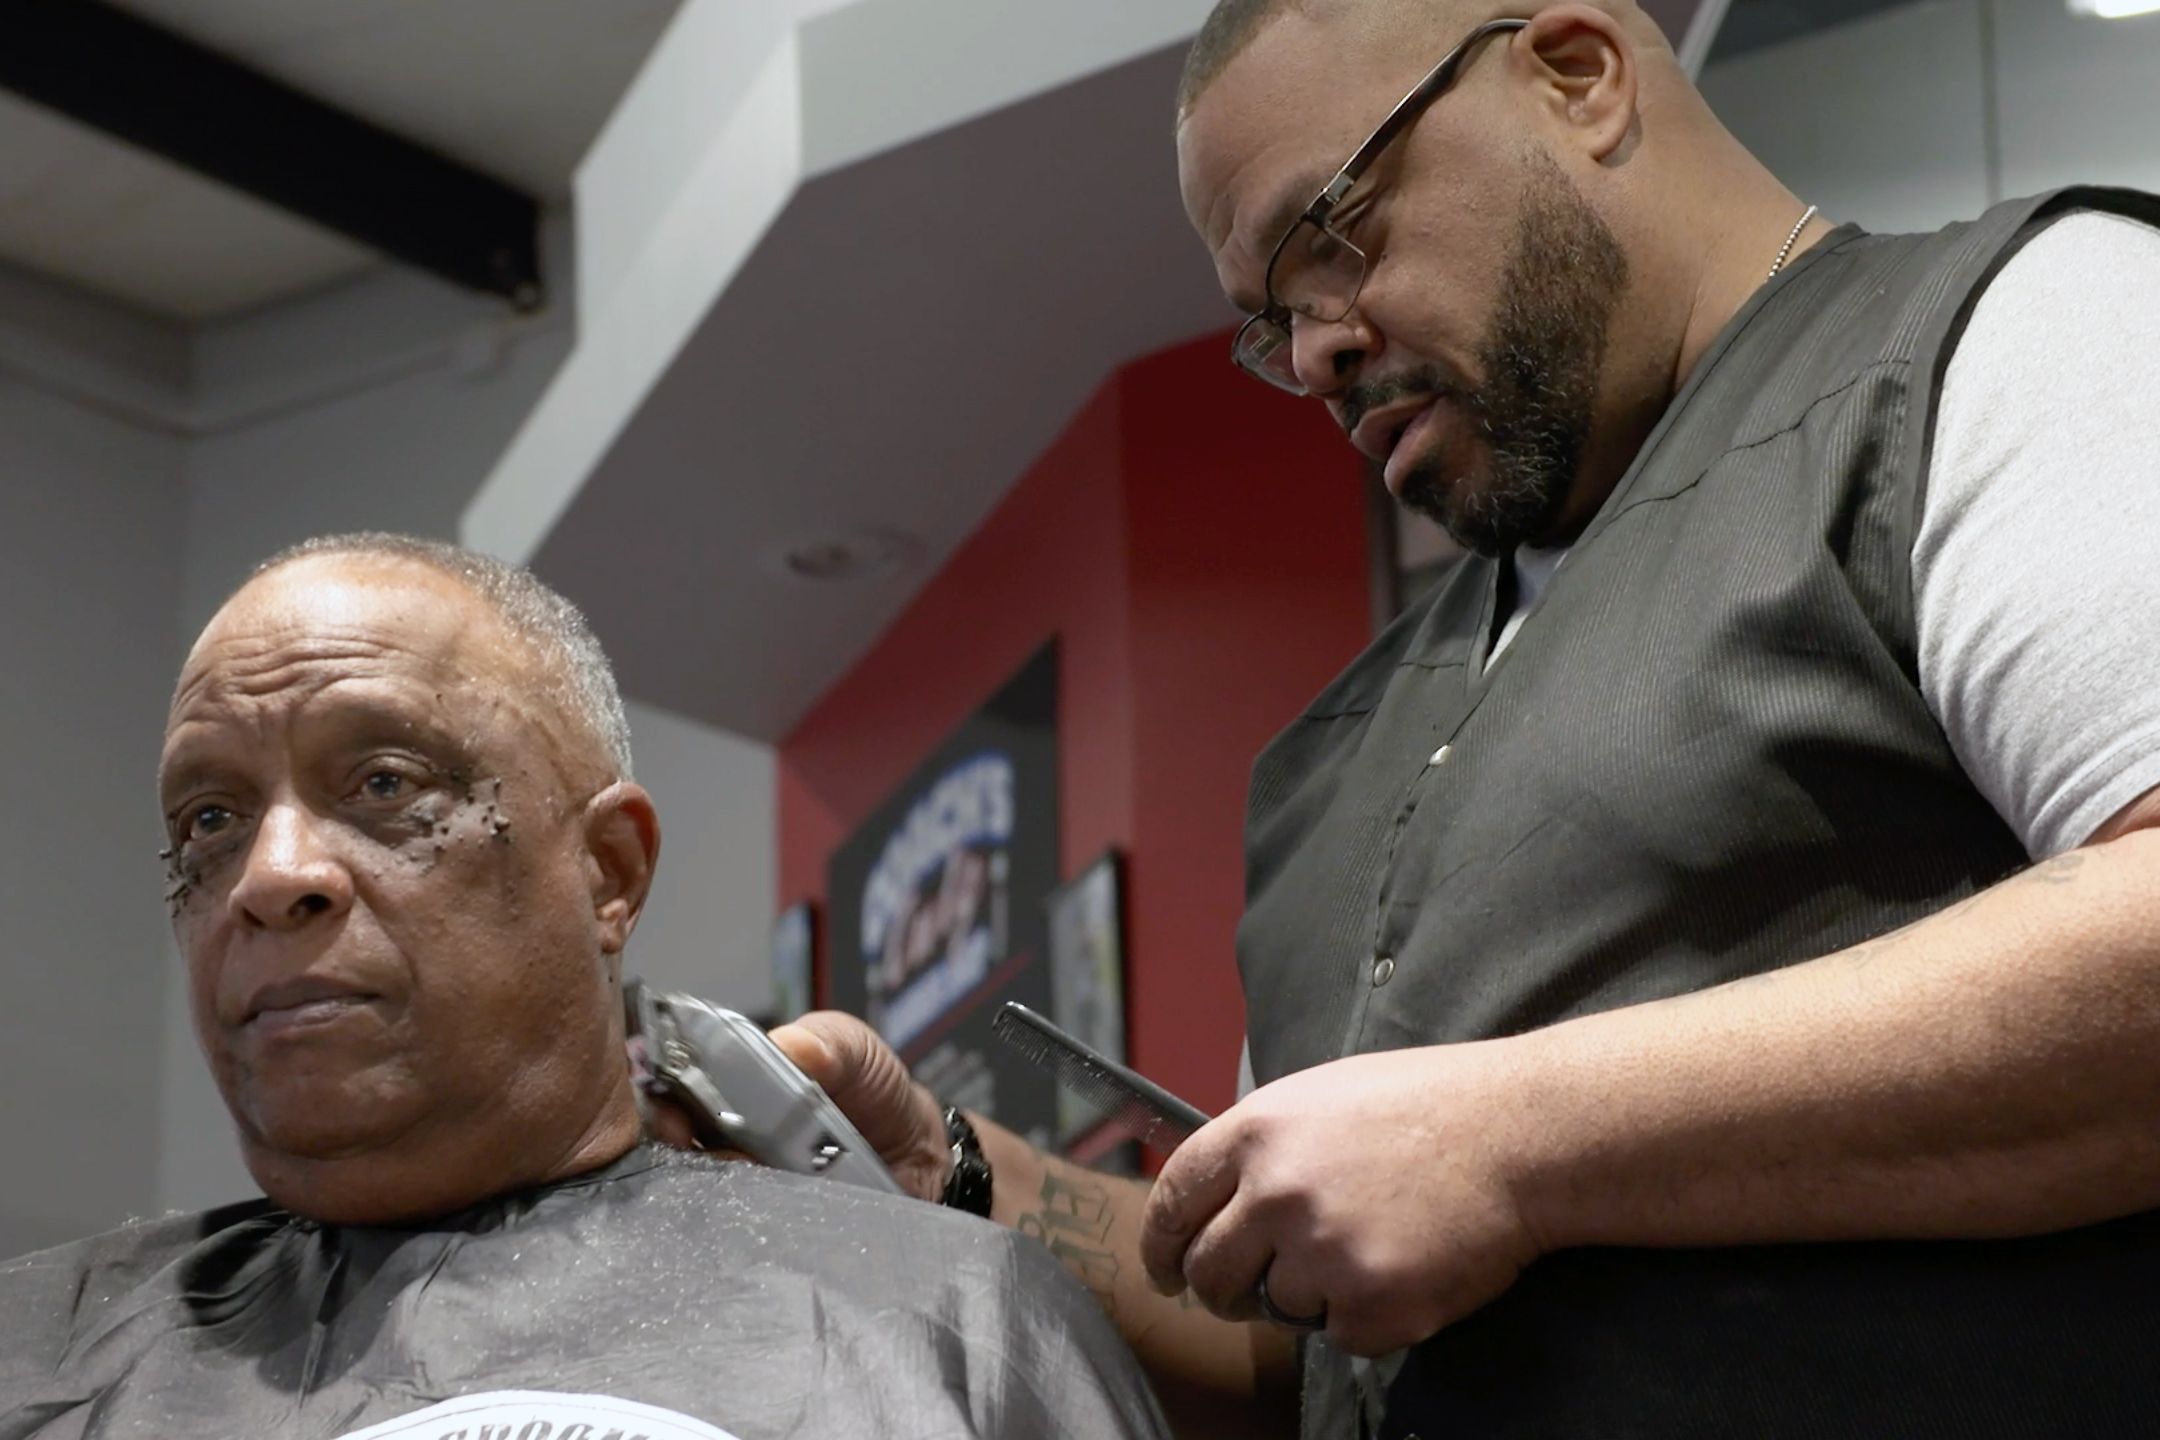 Ray Gipson cuts customer's hair